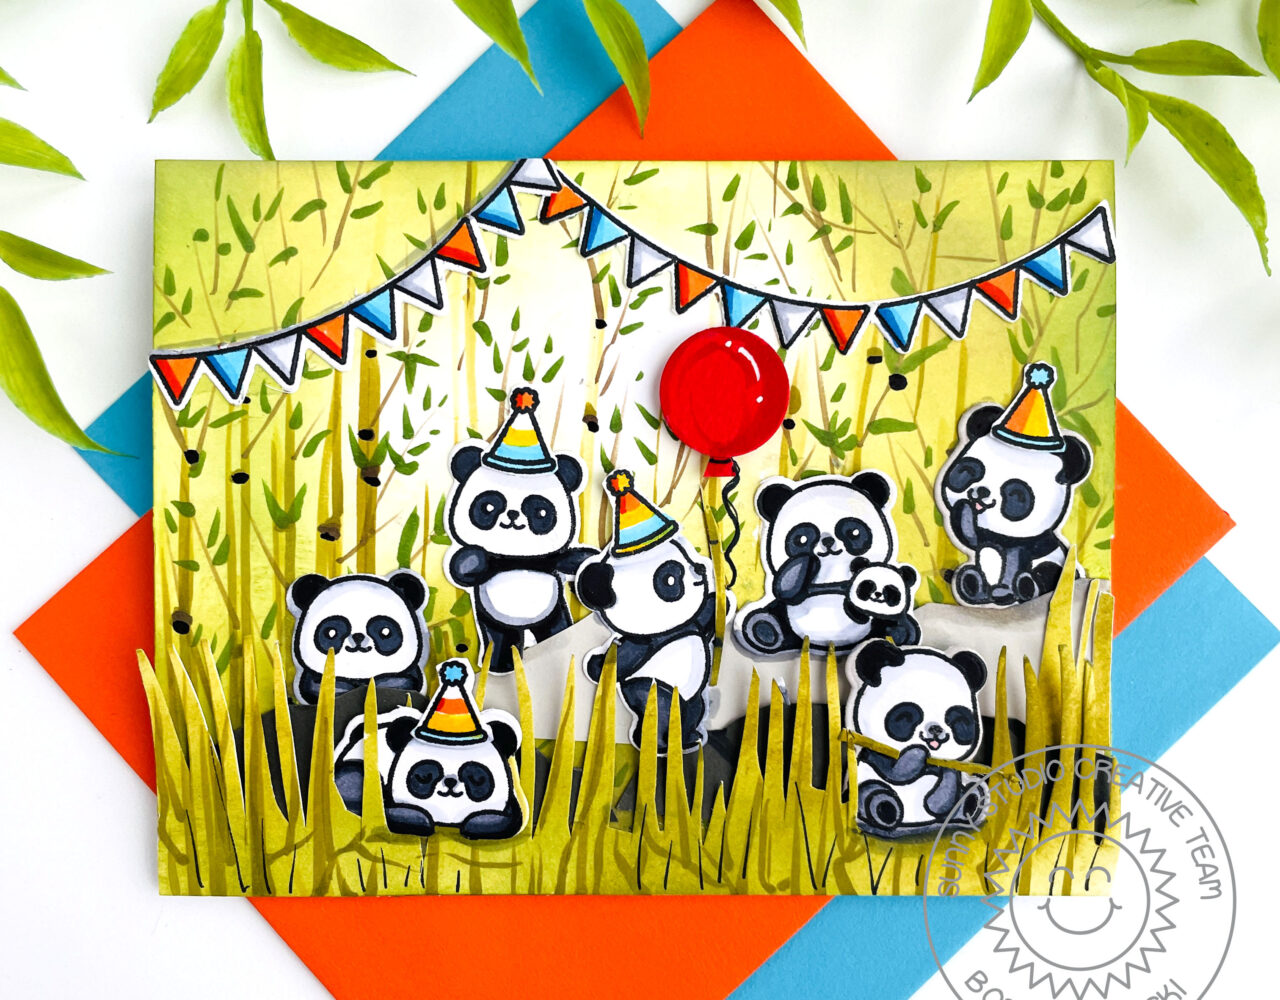 It’s a Panda Party!